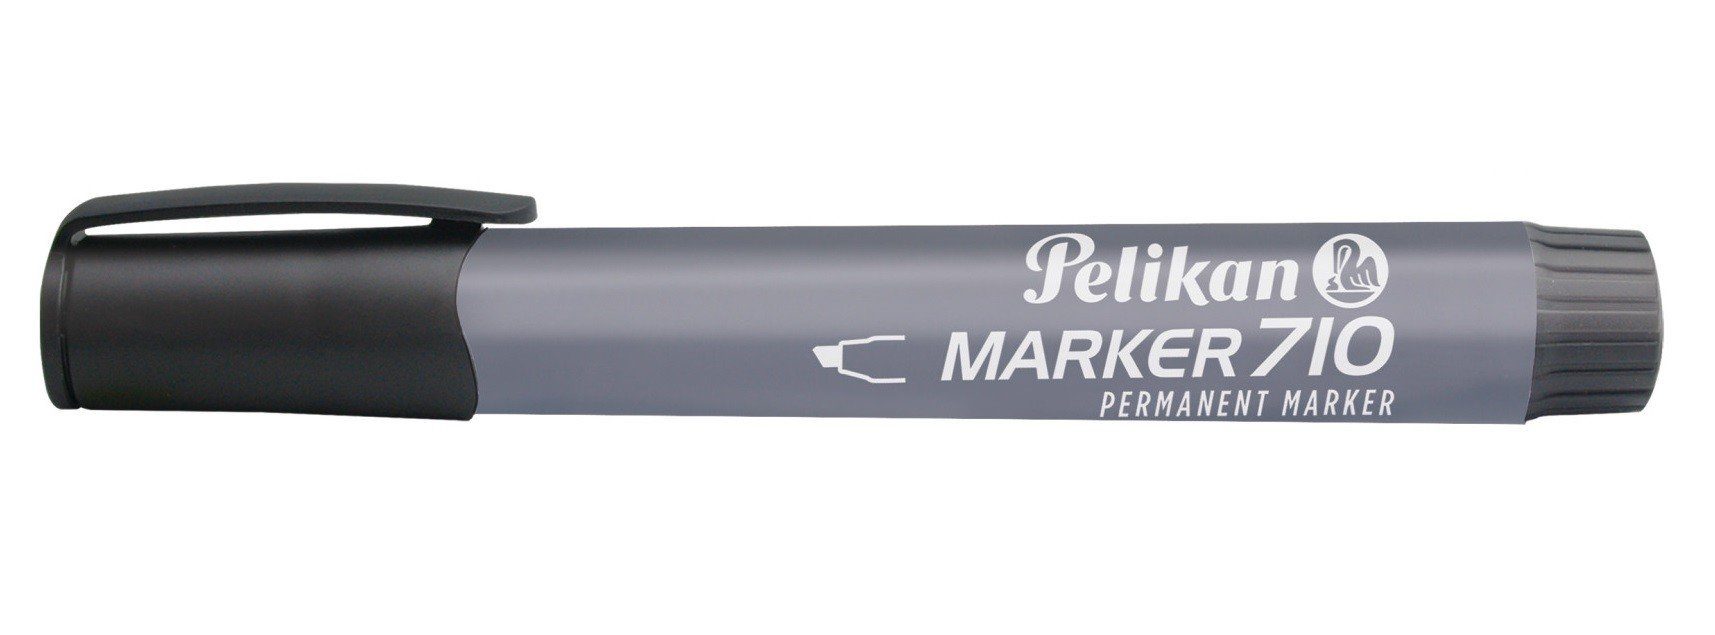 Pelikan Marker Pelikan Marker 710 schwarz